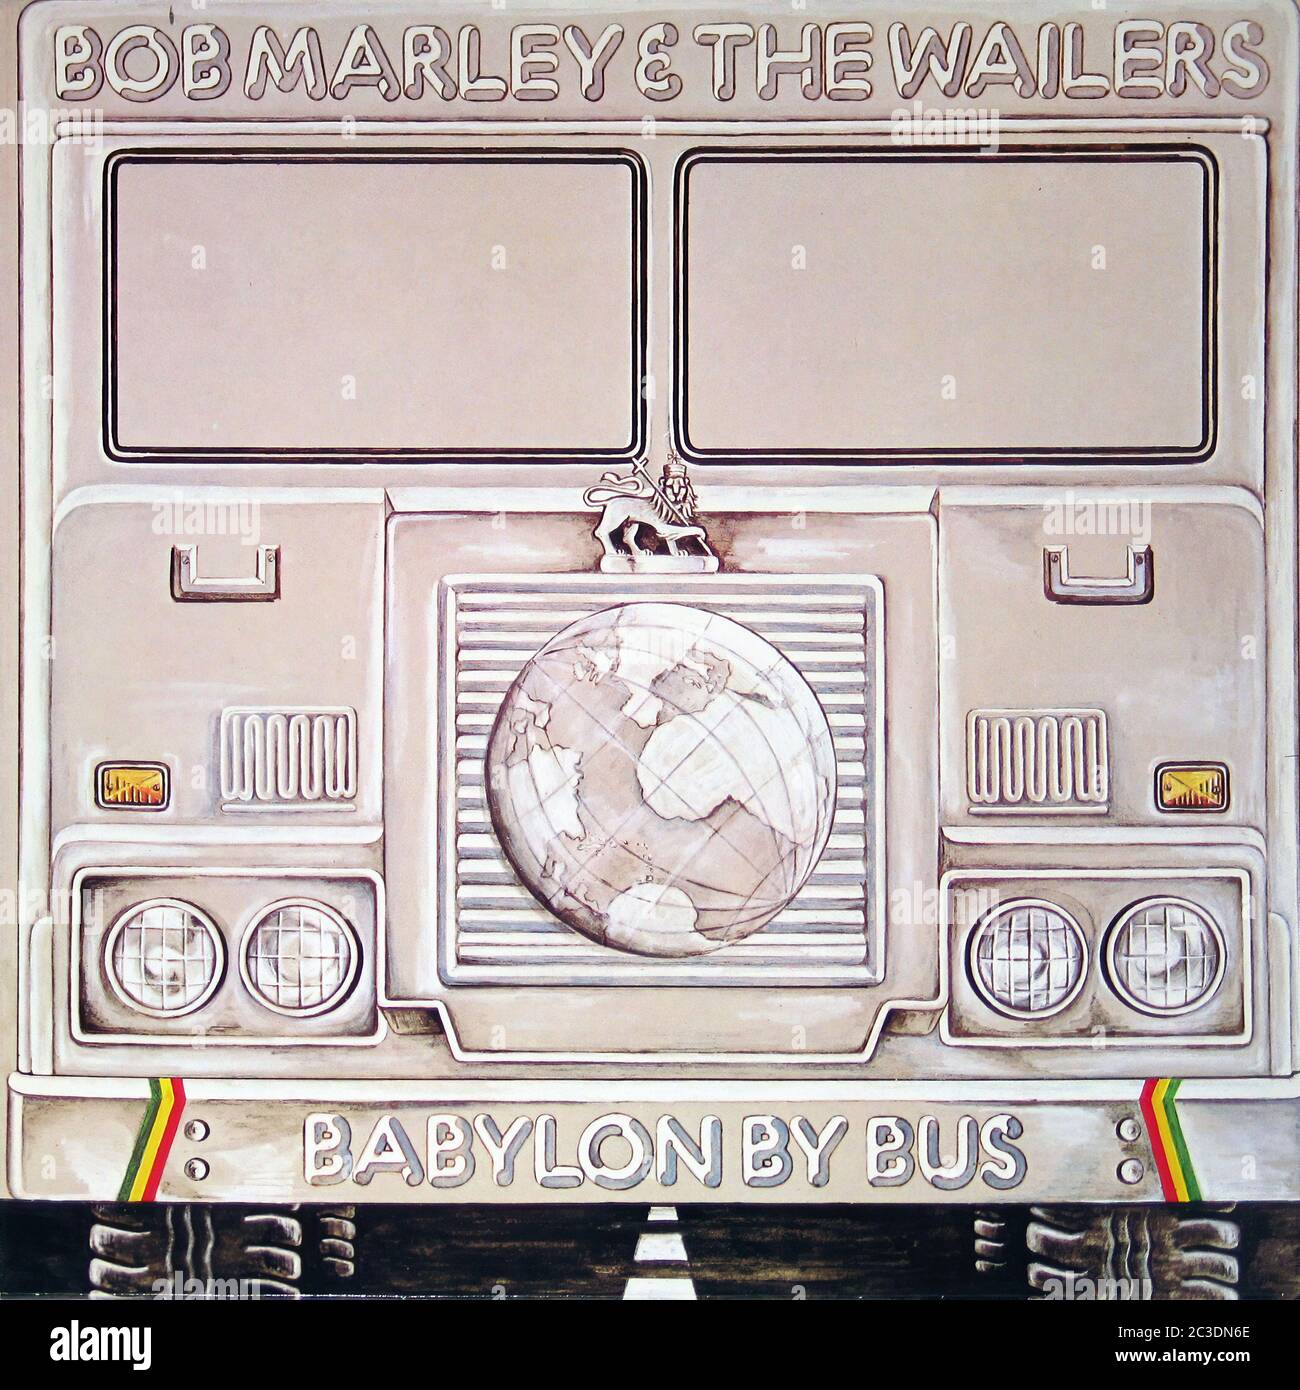 Bob Marley  The Wailers Babylon By Bus